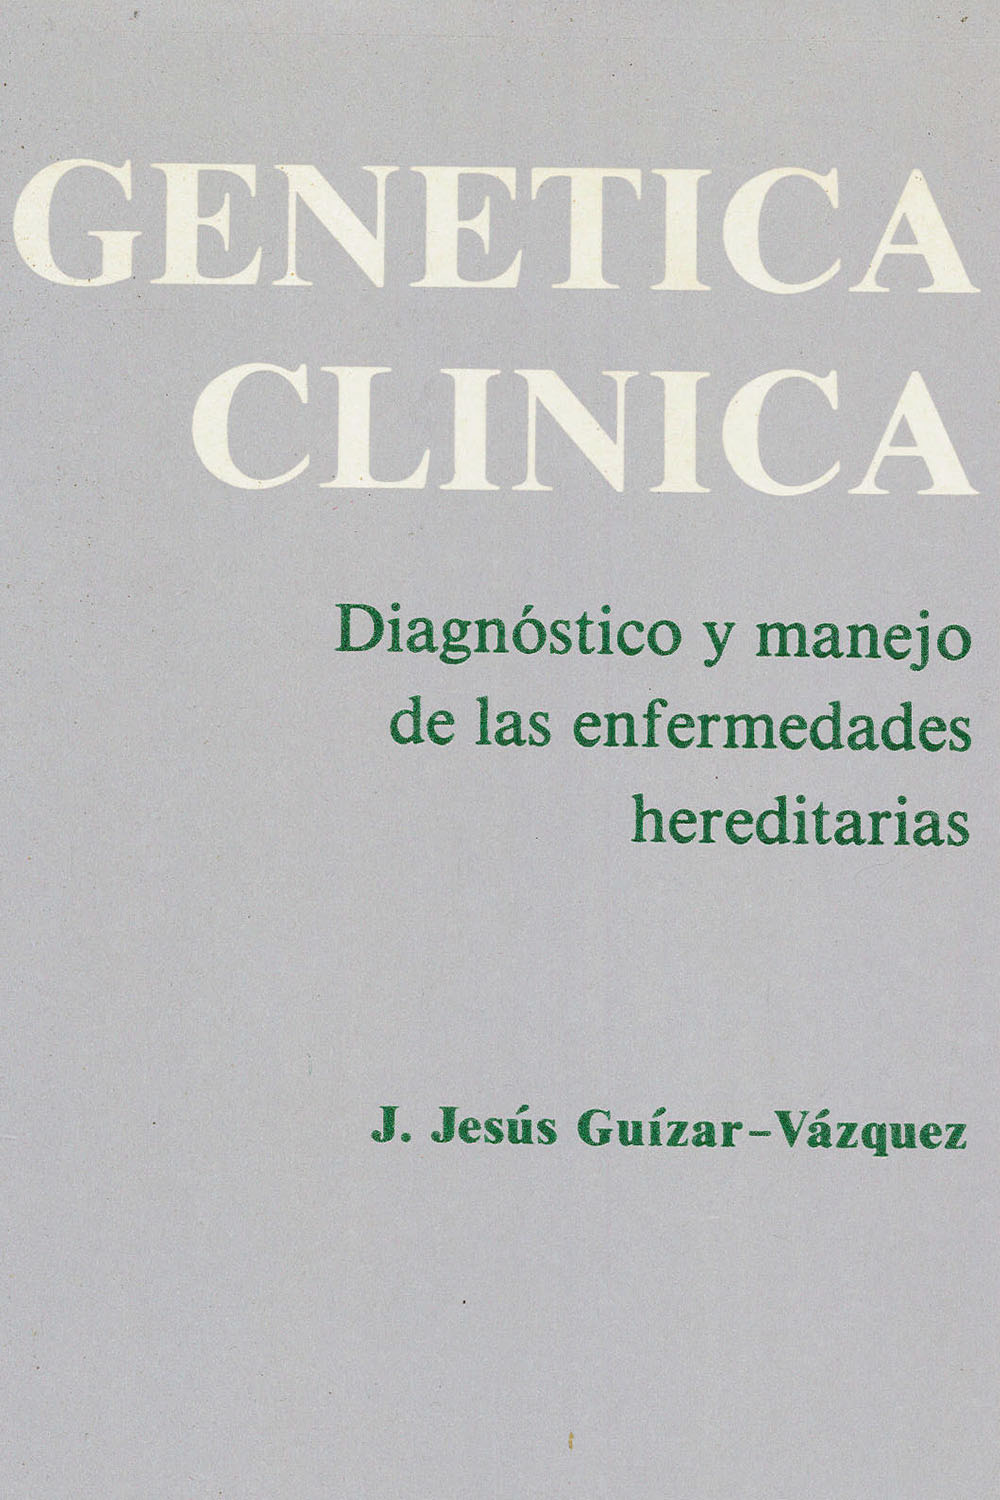 24 / 26 - RB155 G85 Genética Clínica, J. Jesús Guízar-Vázquez - Manual Moderno, México 1988